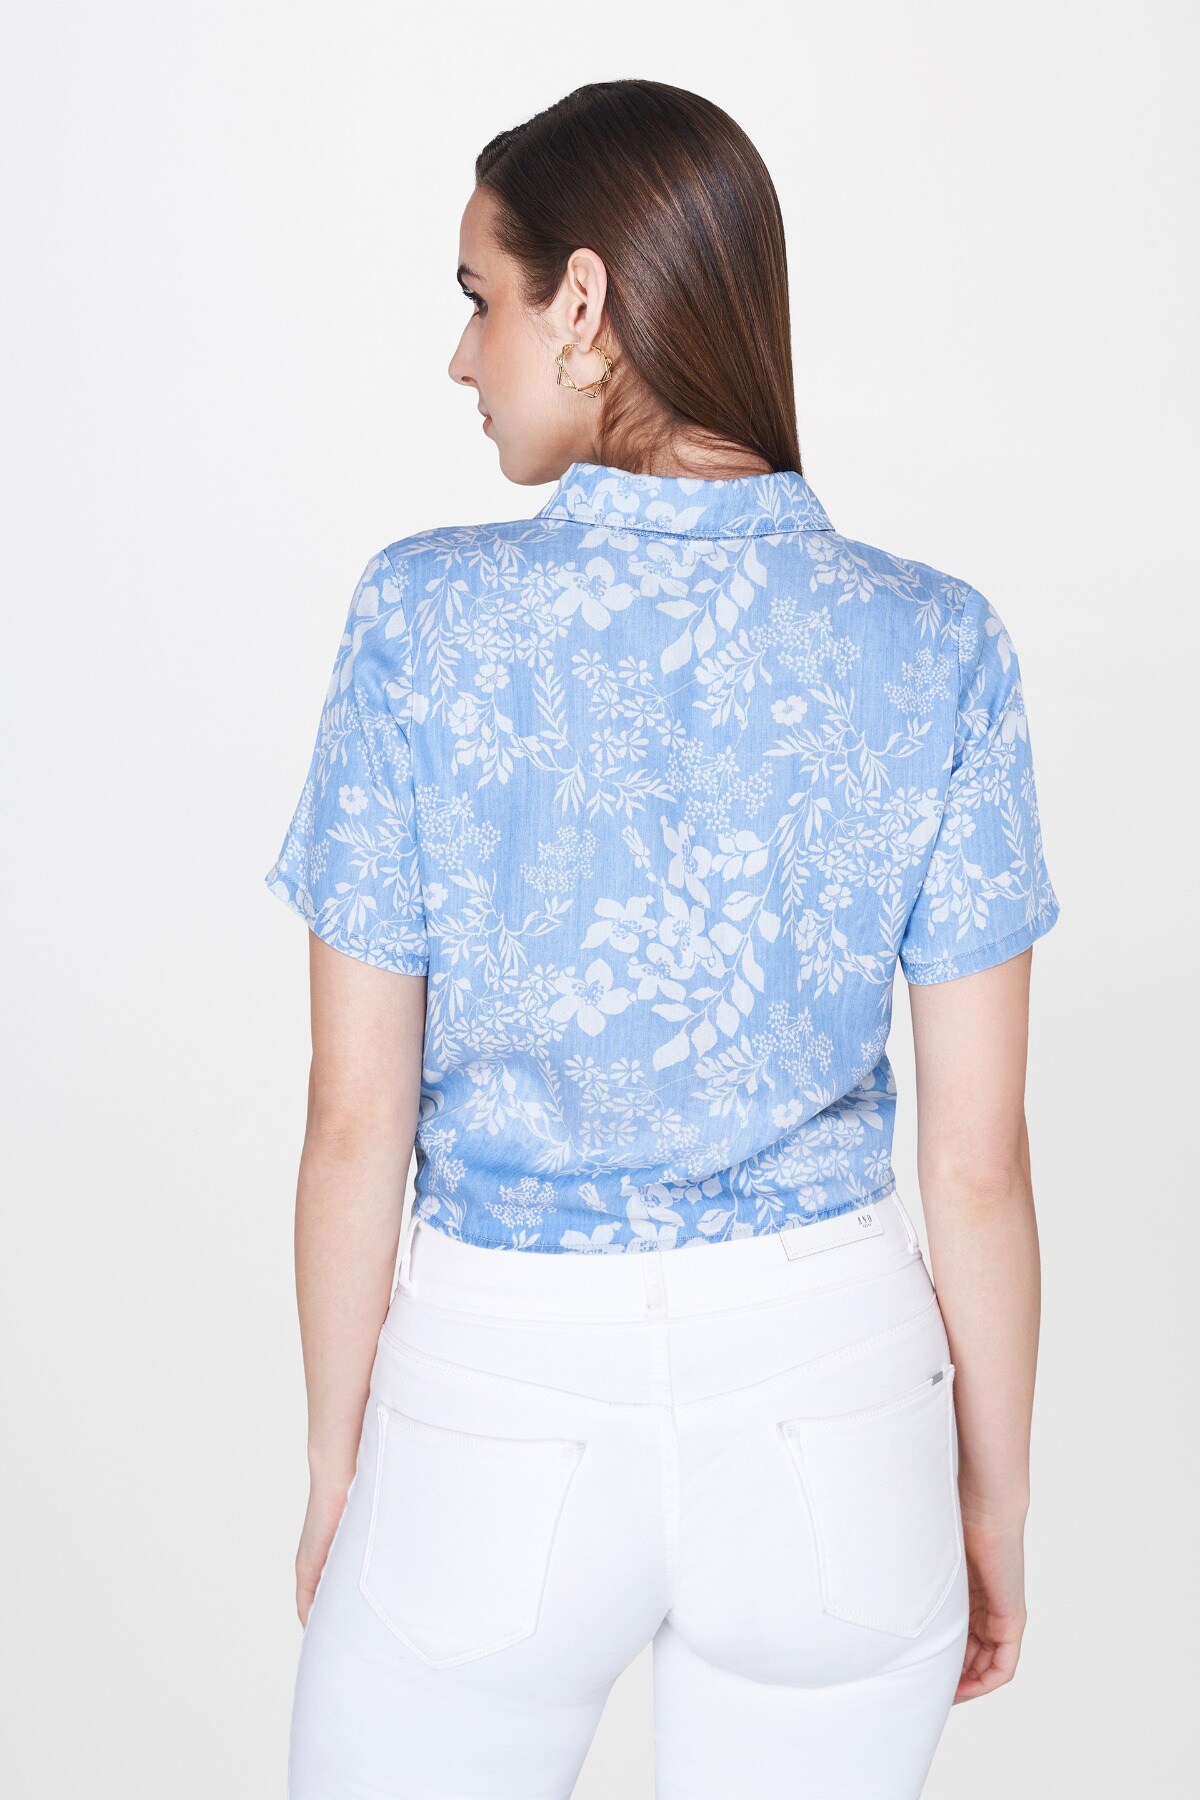 3 - Light Blue Floral Tie-Ups Shirt Style Crop Top, image 3